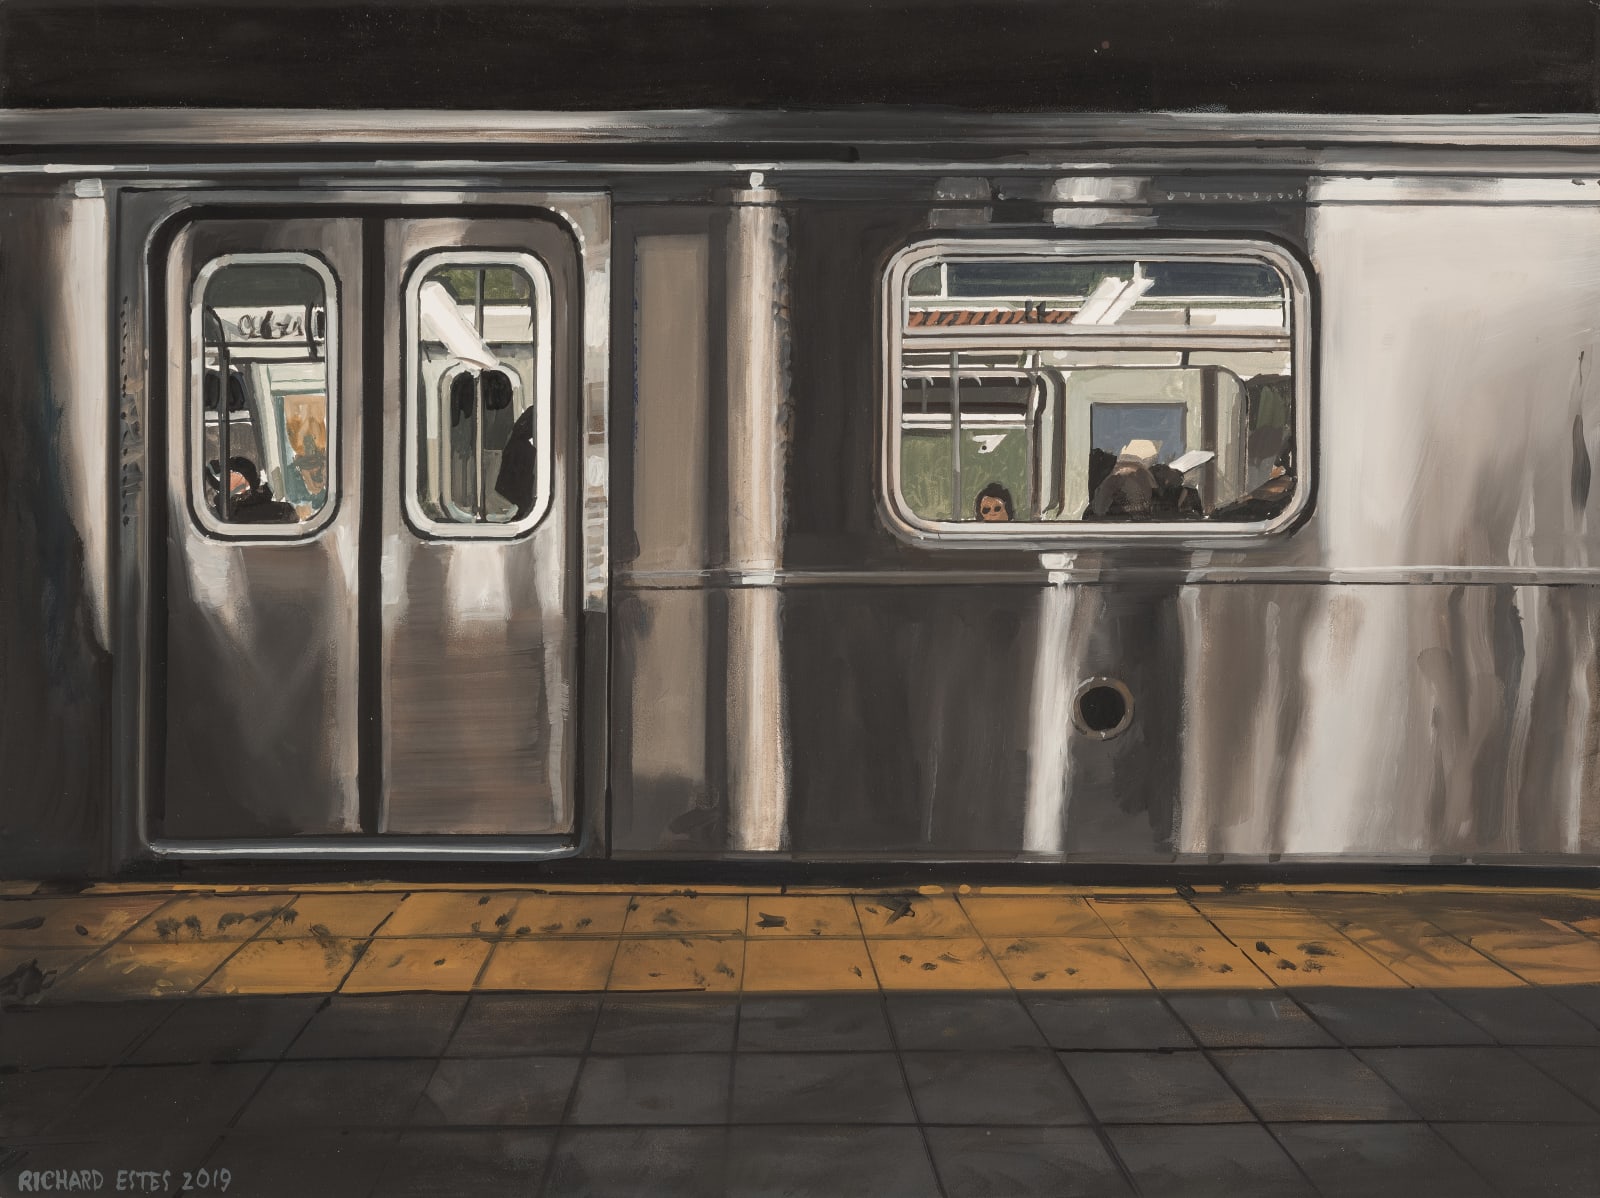 Richard Estes, Subway Car, 2019